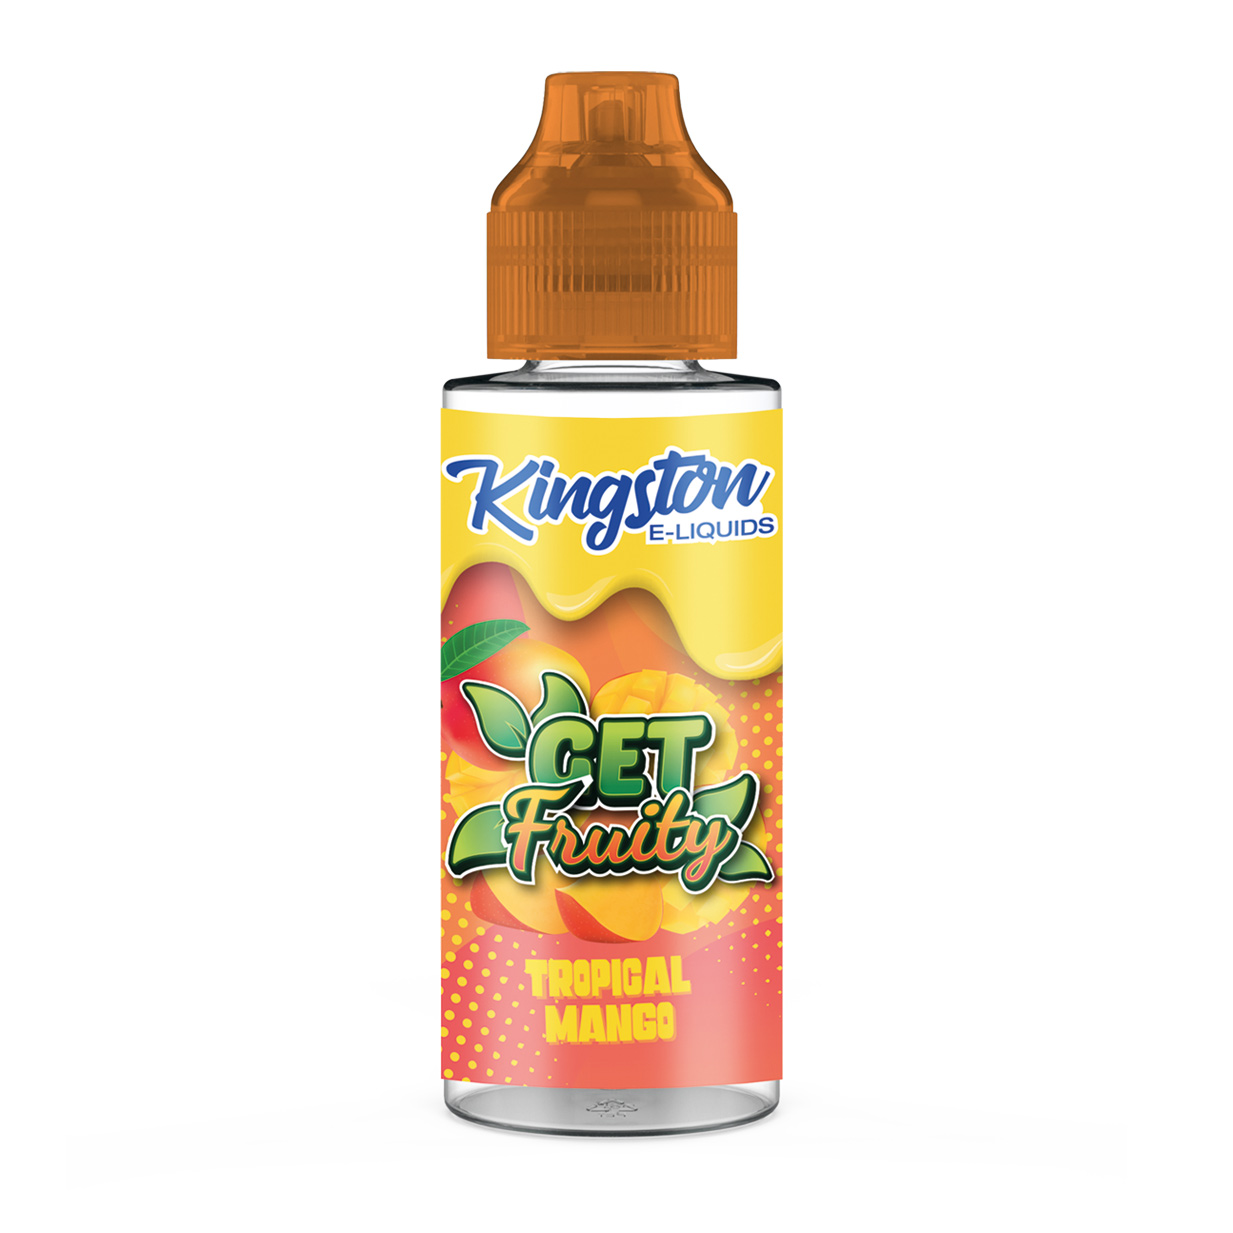 Tropical Mango by Kingston Get Fruity 100ml.jpg